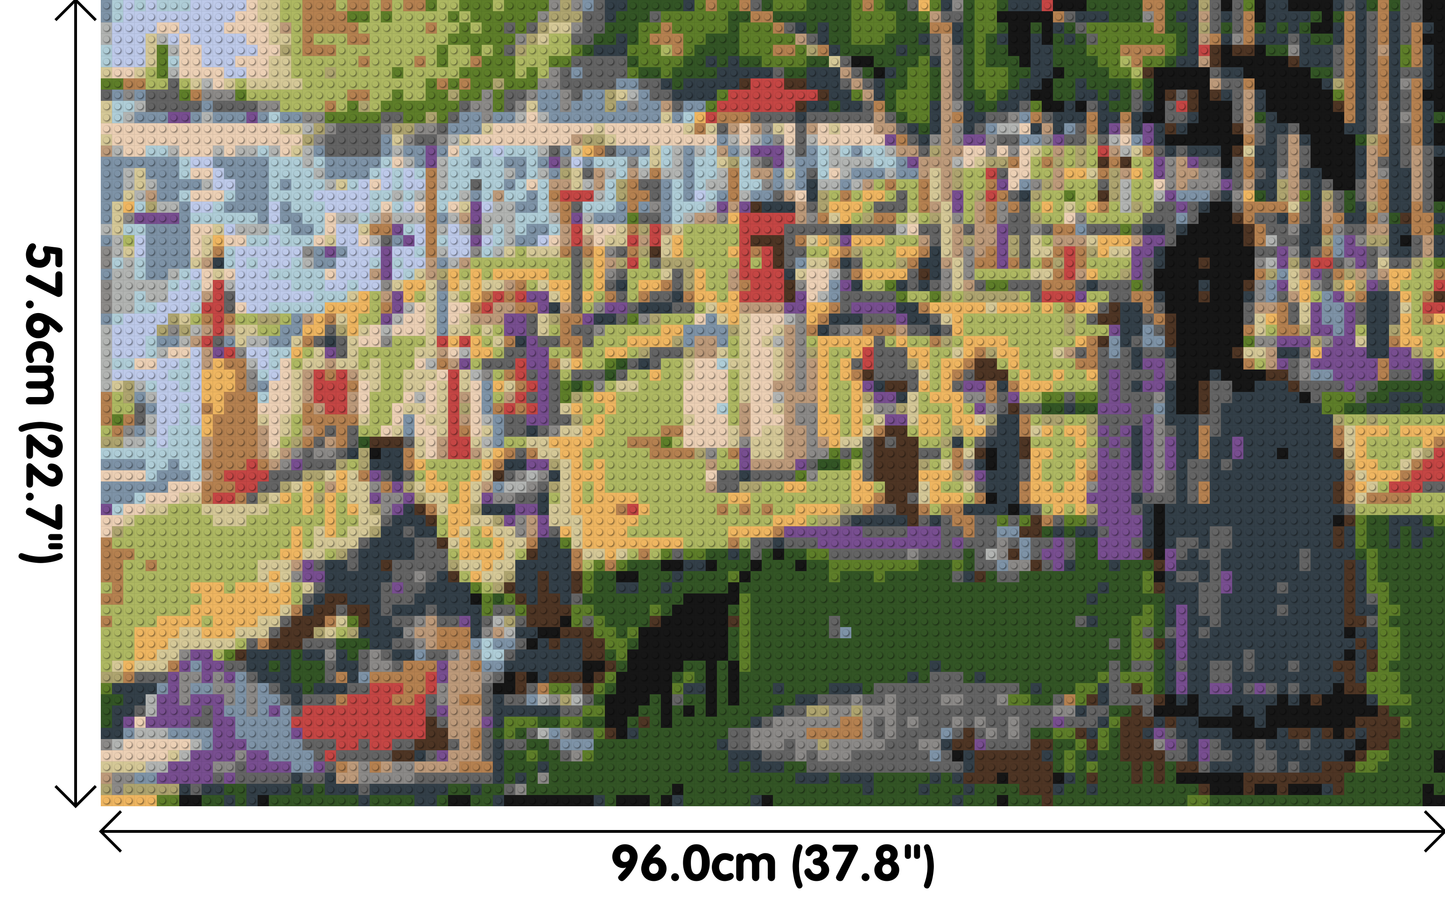 Sunday On La Grande Jatte by Georges Seurat  - Brick Art Mosaic Kit